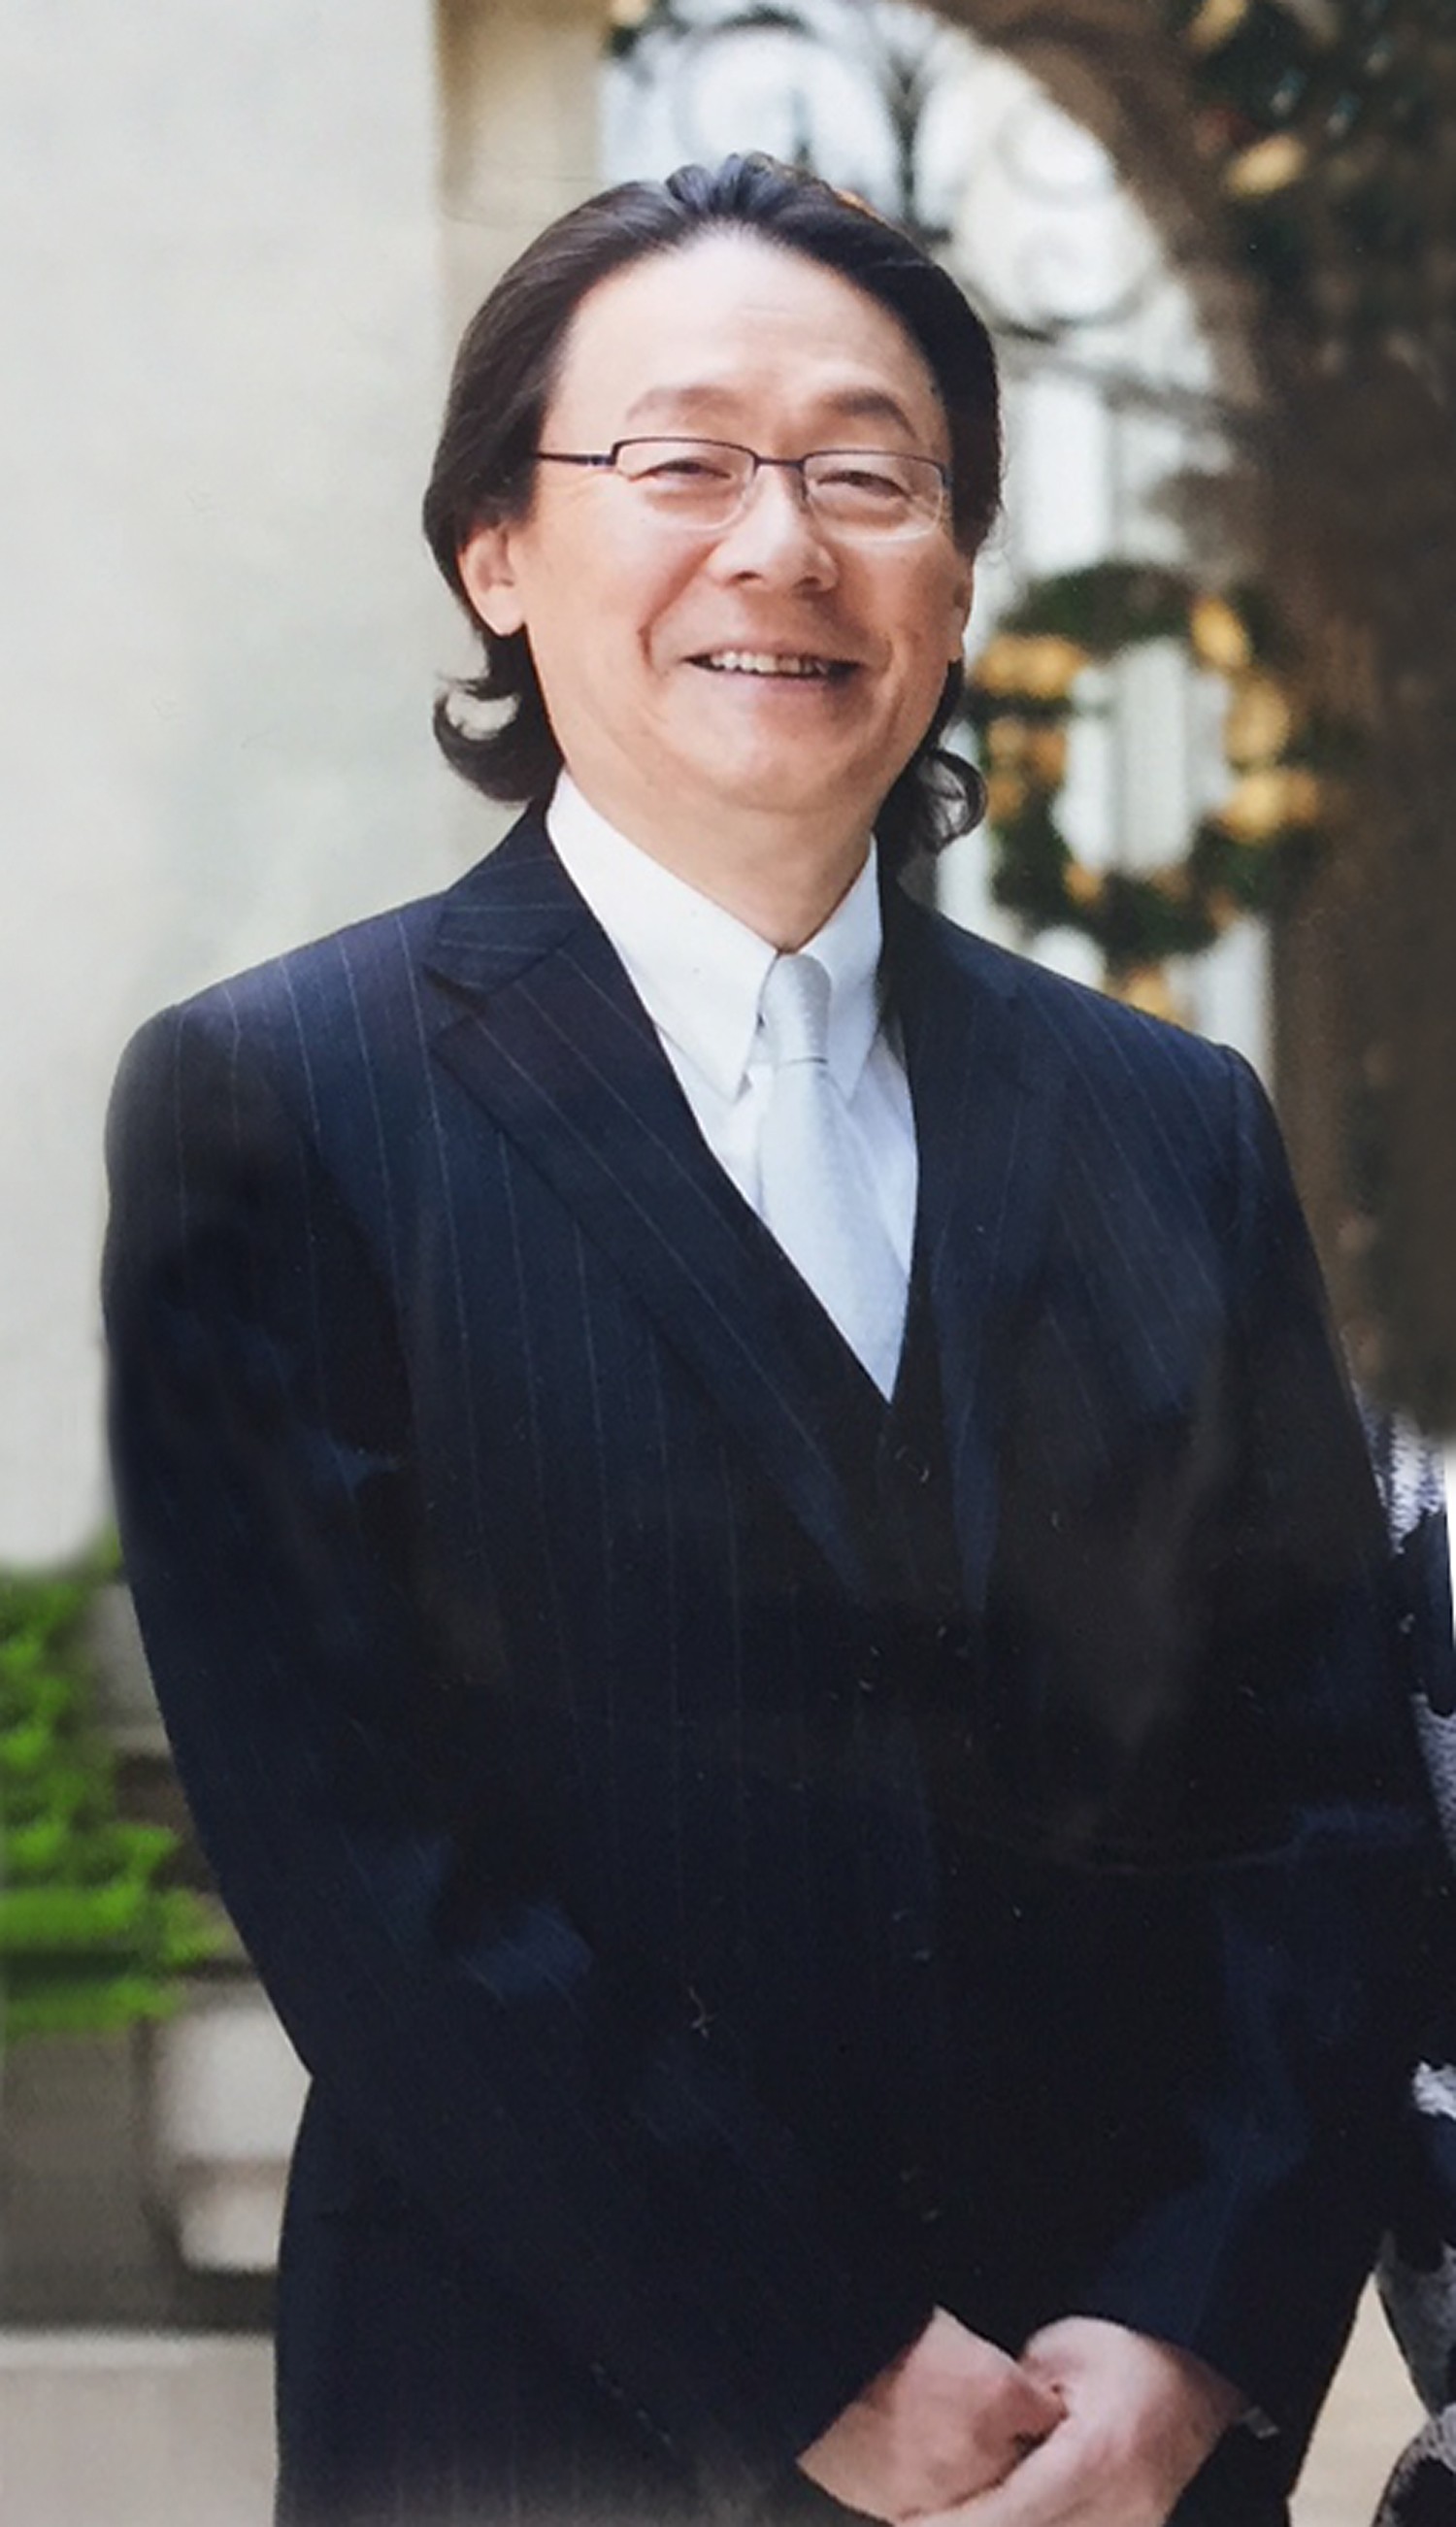 Masayuki Tsukada, CEO and president